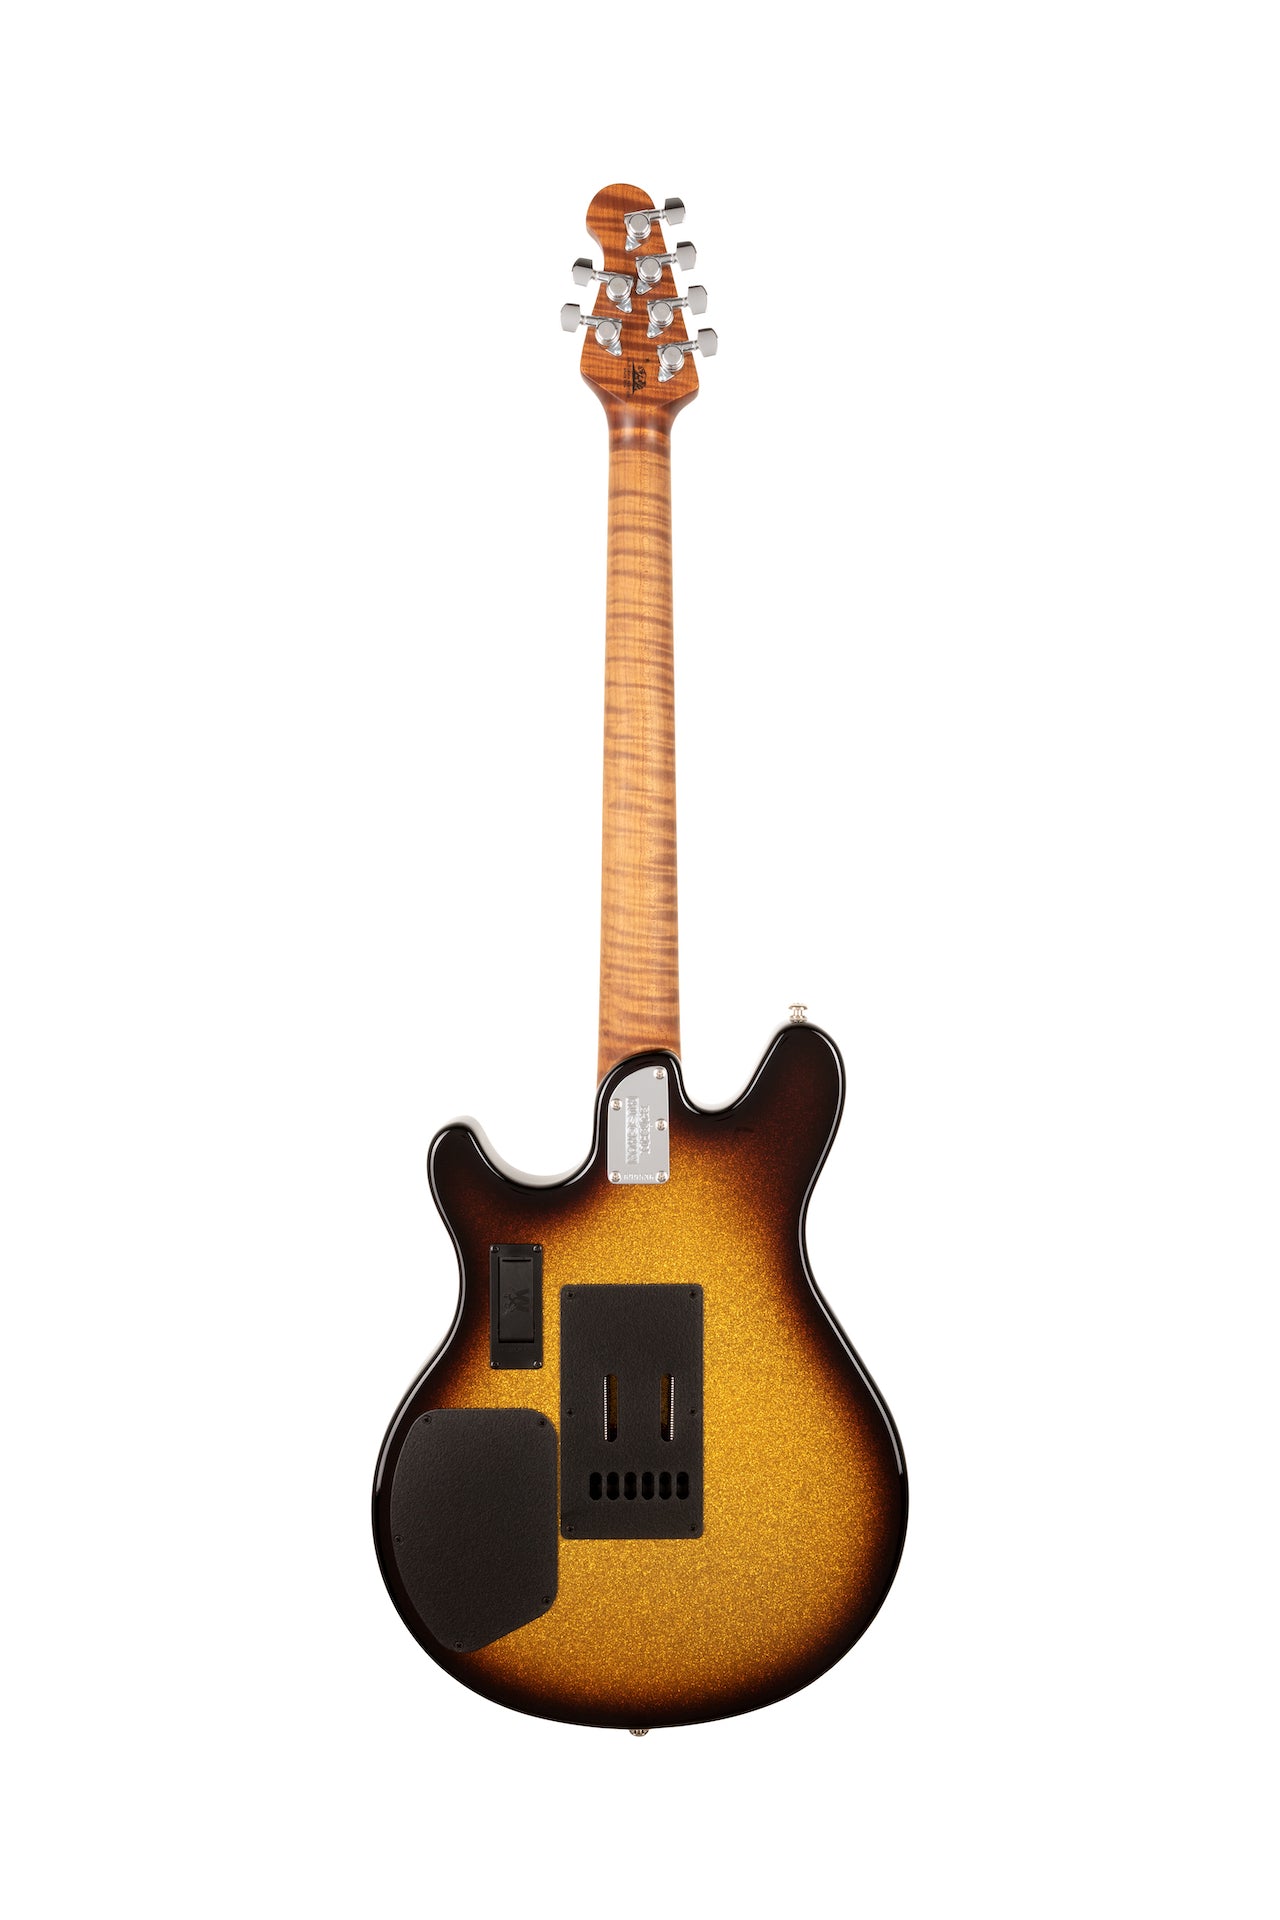 Ernie Ball Music Man Valentine Tremolo Electric Guitar - Tobacco Sparkle H00936 - HIENDGUITAR   Musicman GUITAR